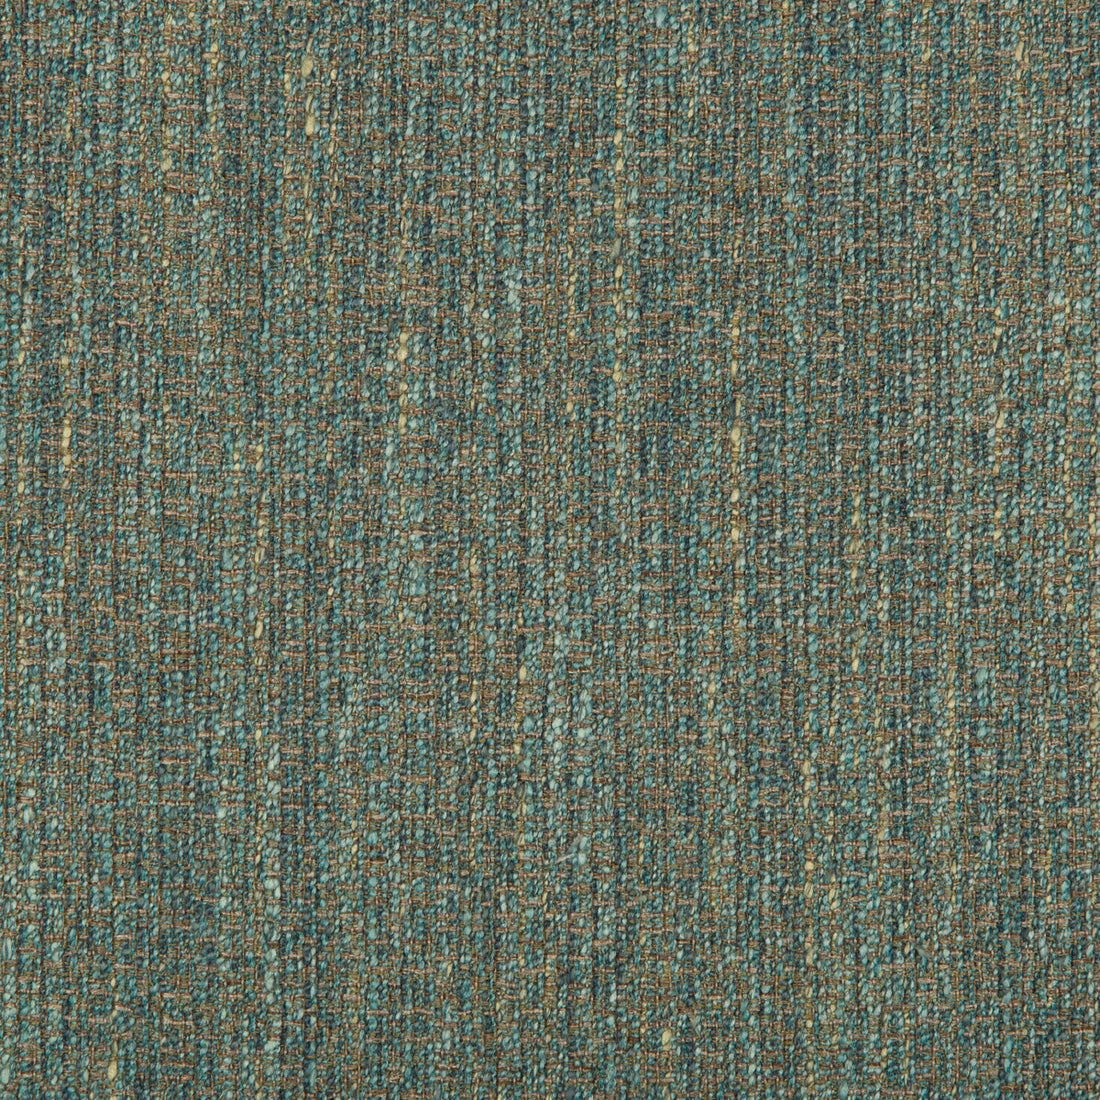 Kravet Smart fabric in 35330-35 color - pattern 35330.35.0 - by Kravet Smart in the Performance Kravetarmor collection